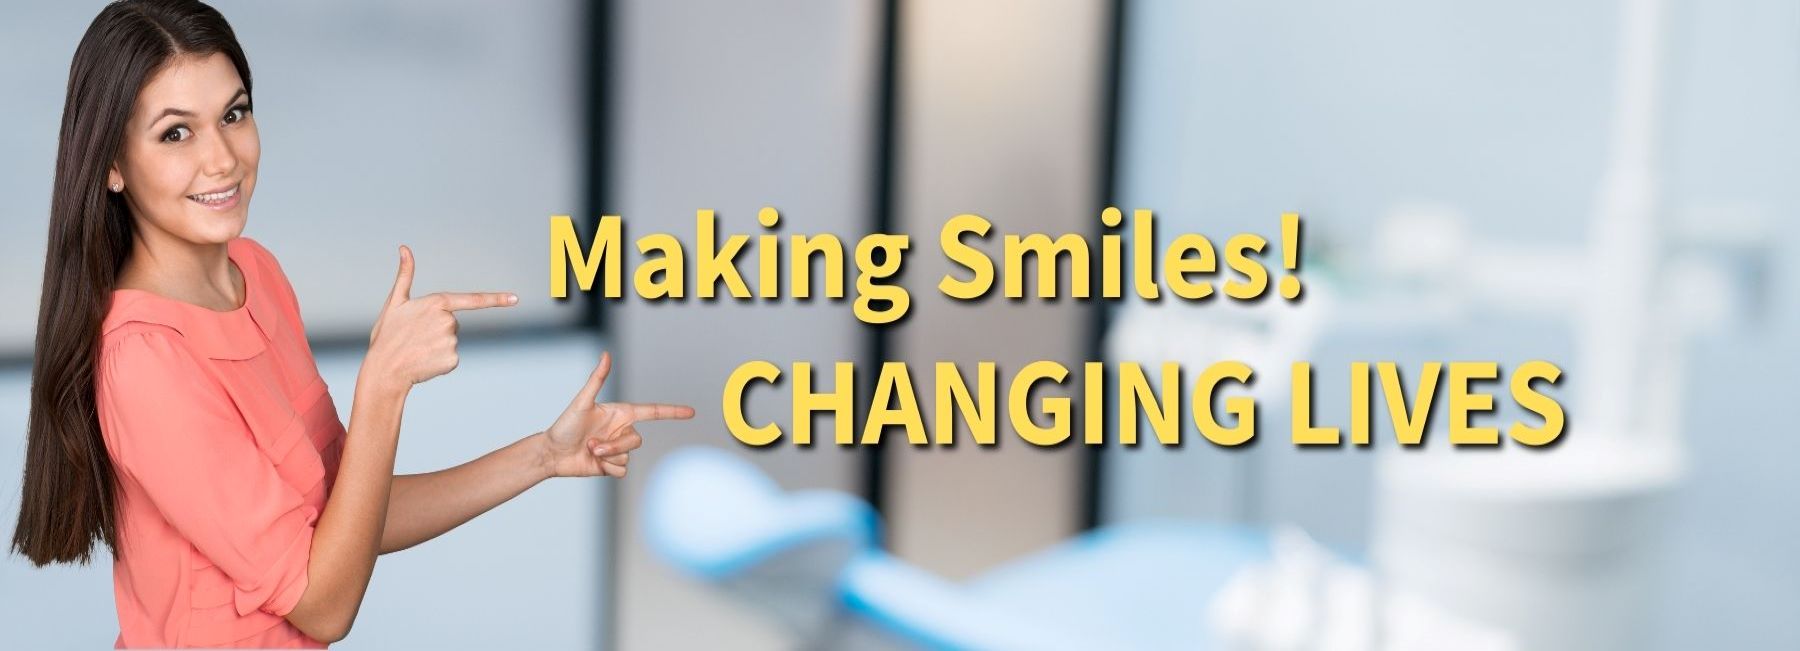 Making Smiles! Changing Lives!